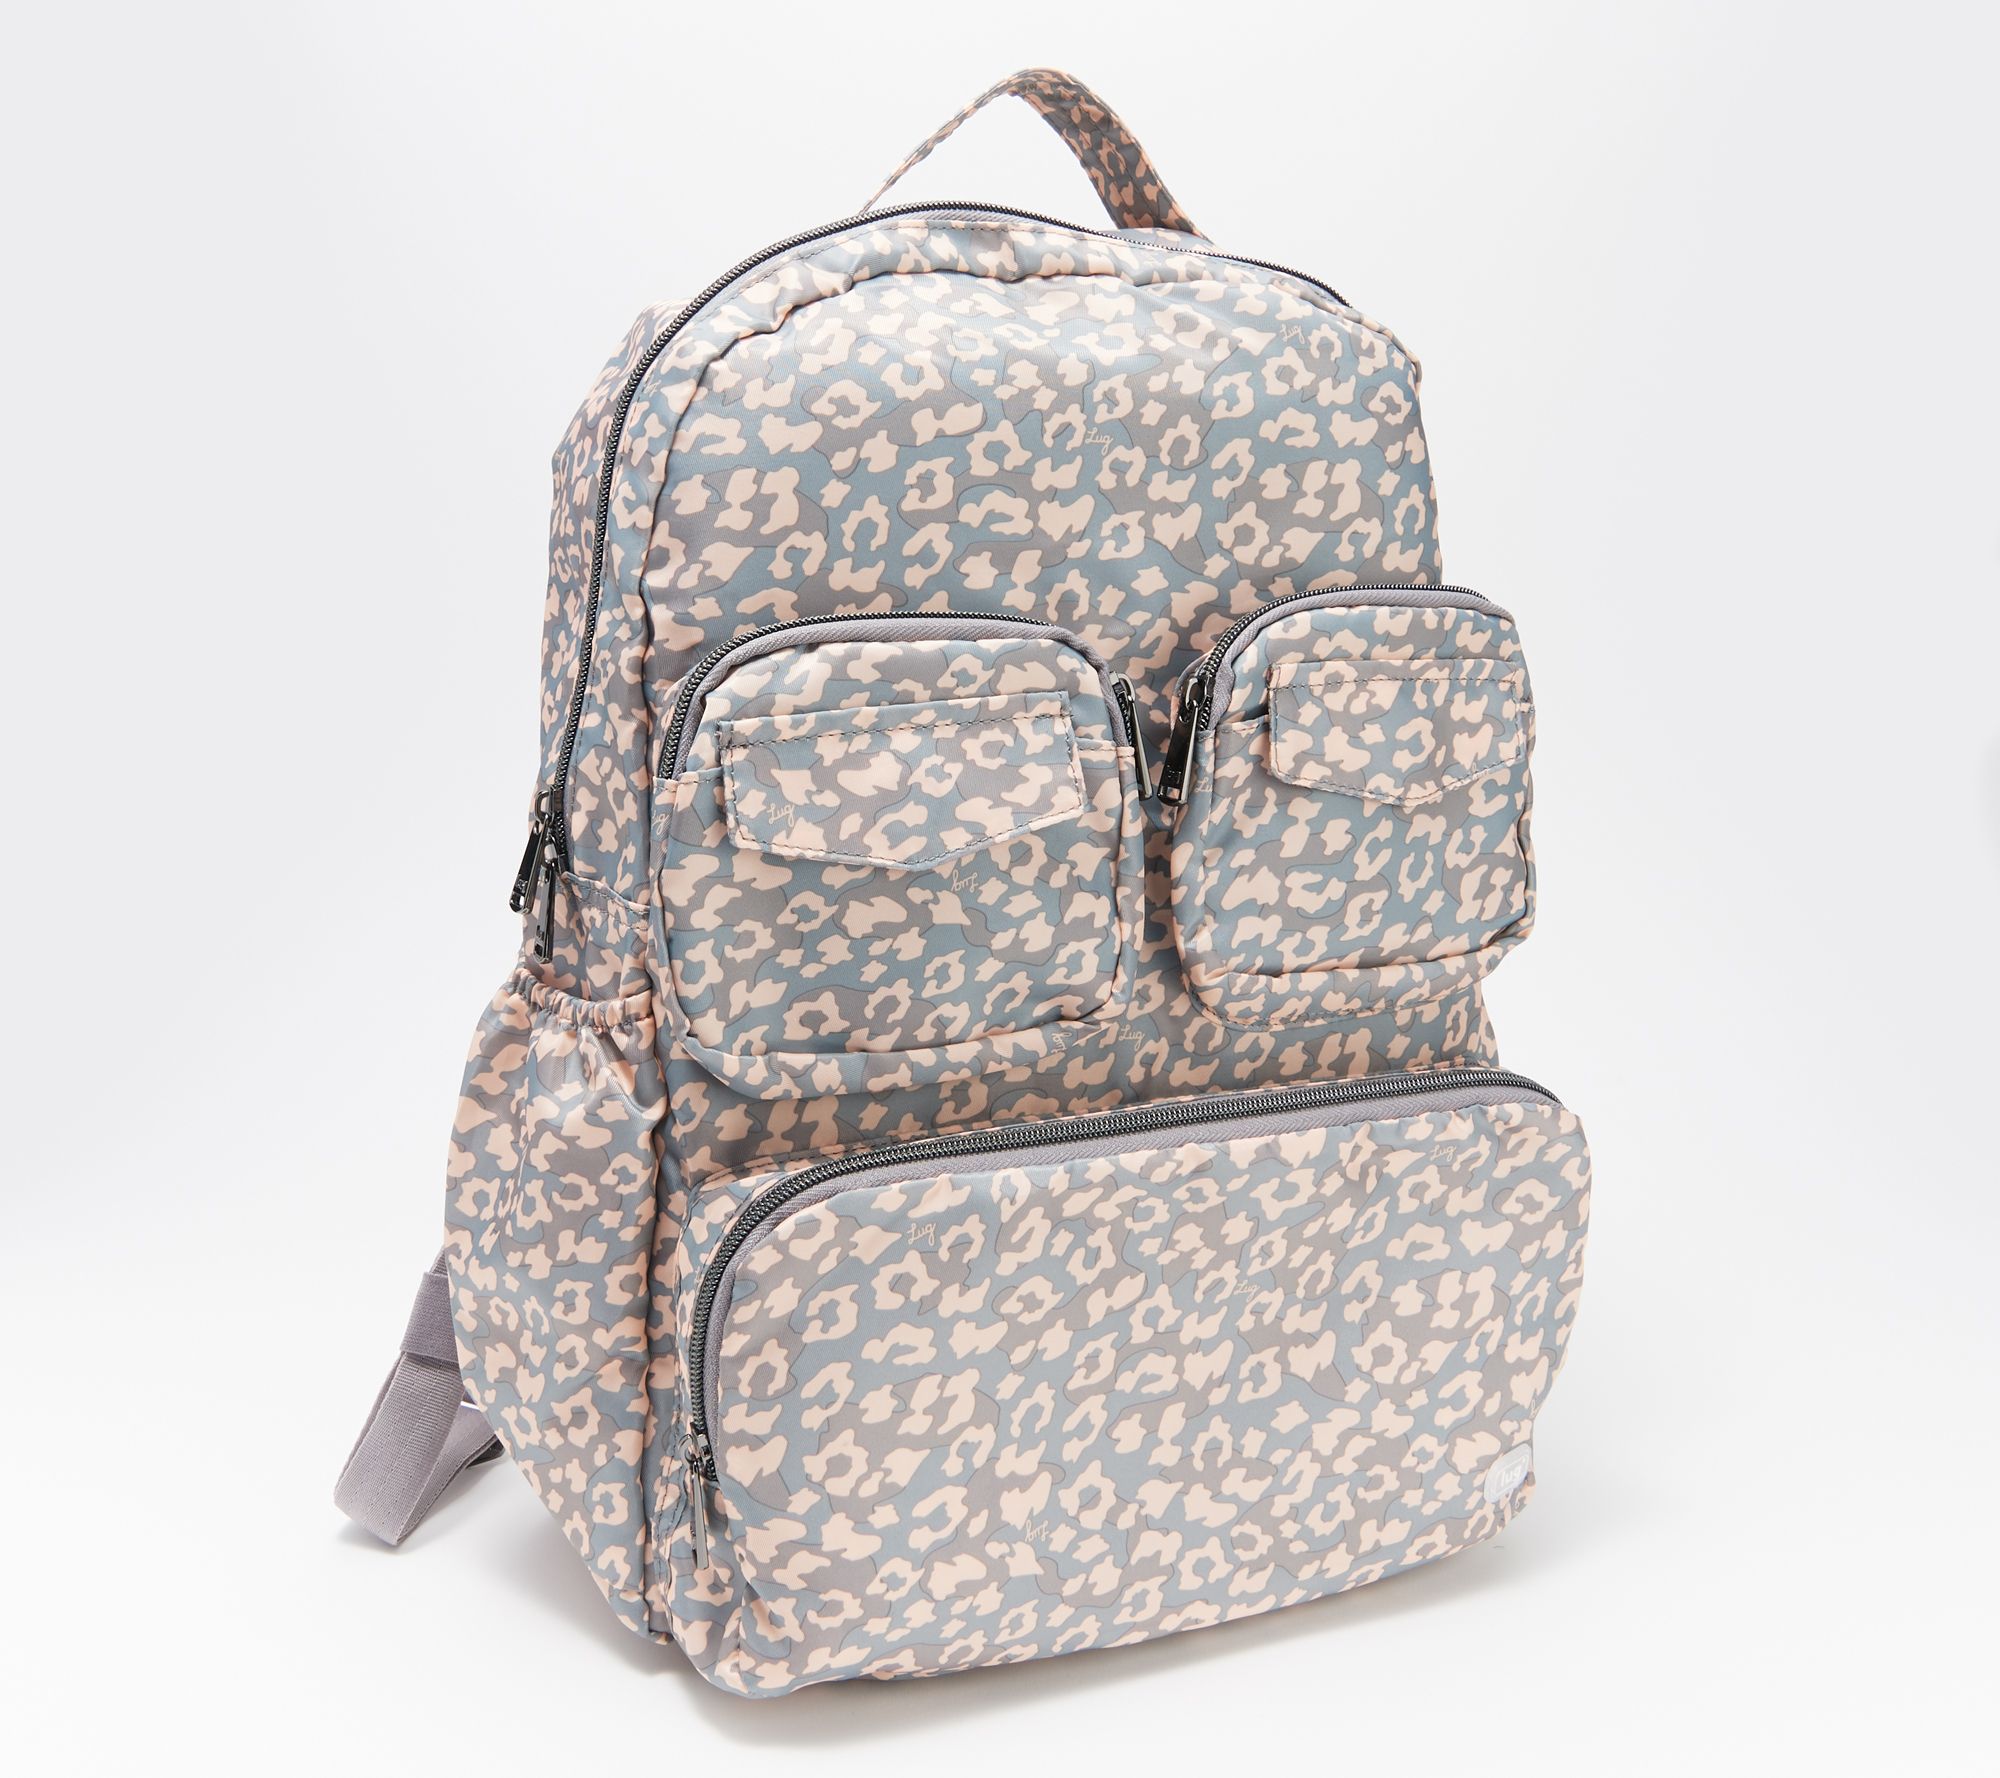 Lug Puddle Jumper Packable Backpack 7 Colors Packable Bag NEW 